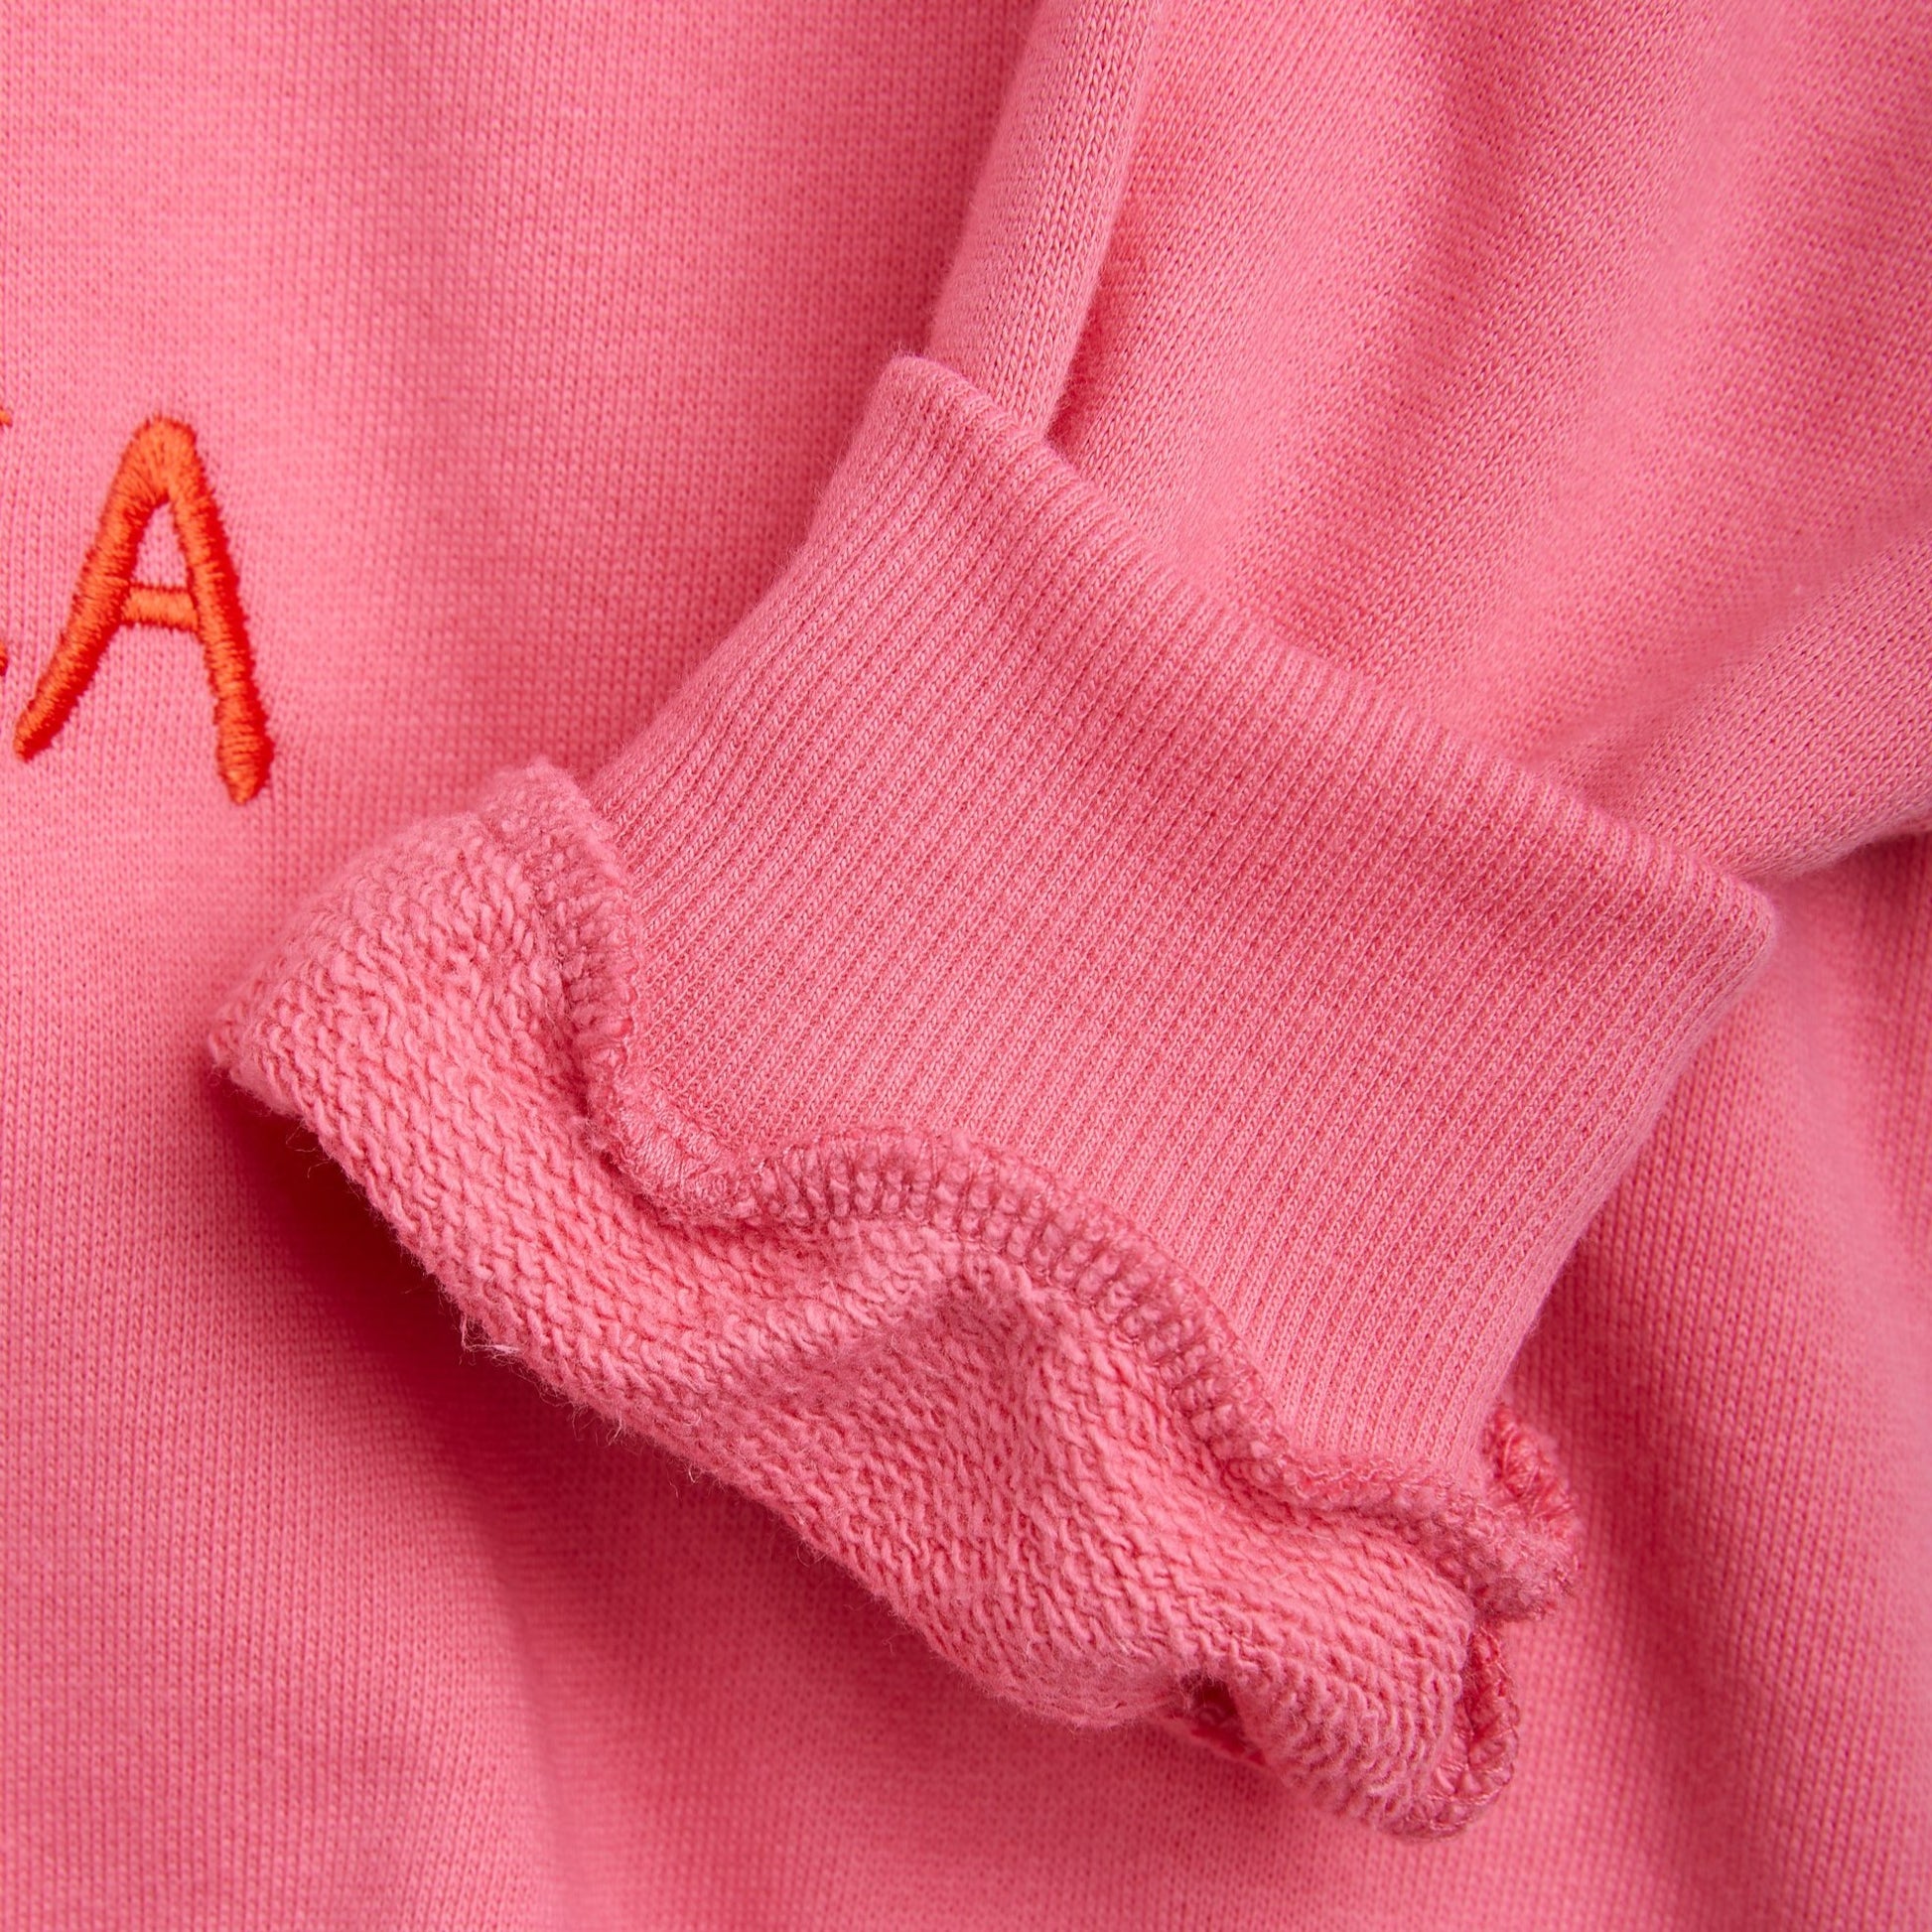 MINI RODINI Parrot Embroidered Sweatshirt Pink ALWAYS SHOW